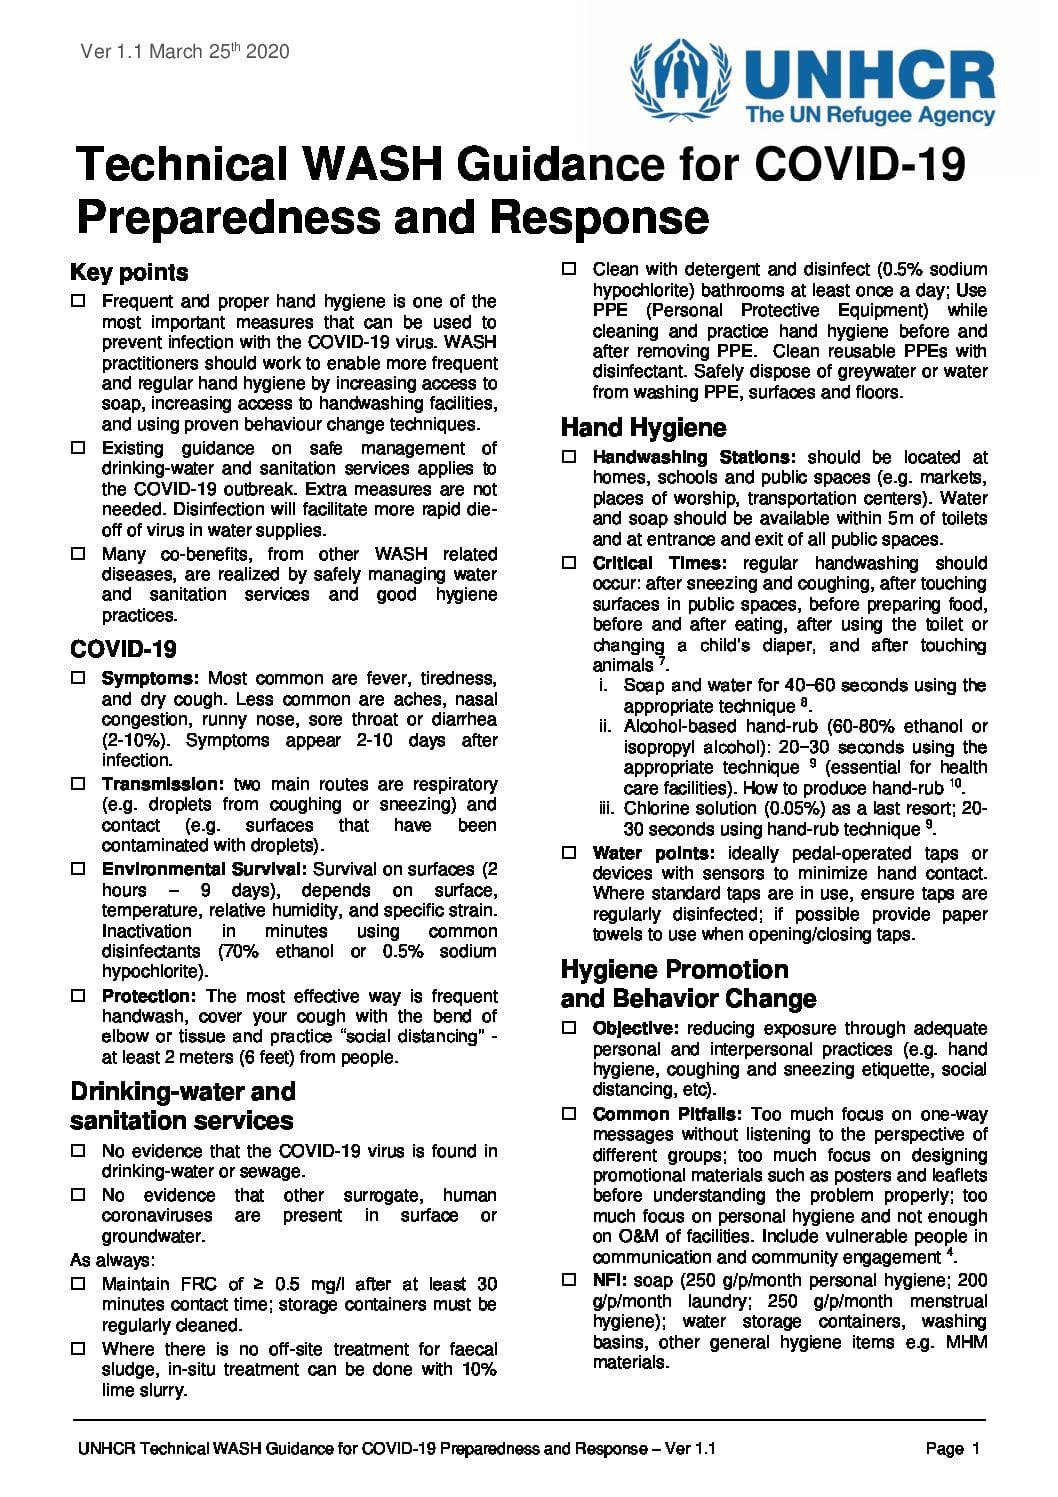 WASH Guidance for COVID-19 Preparedness and Response